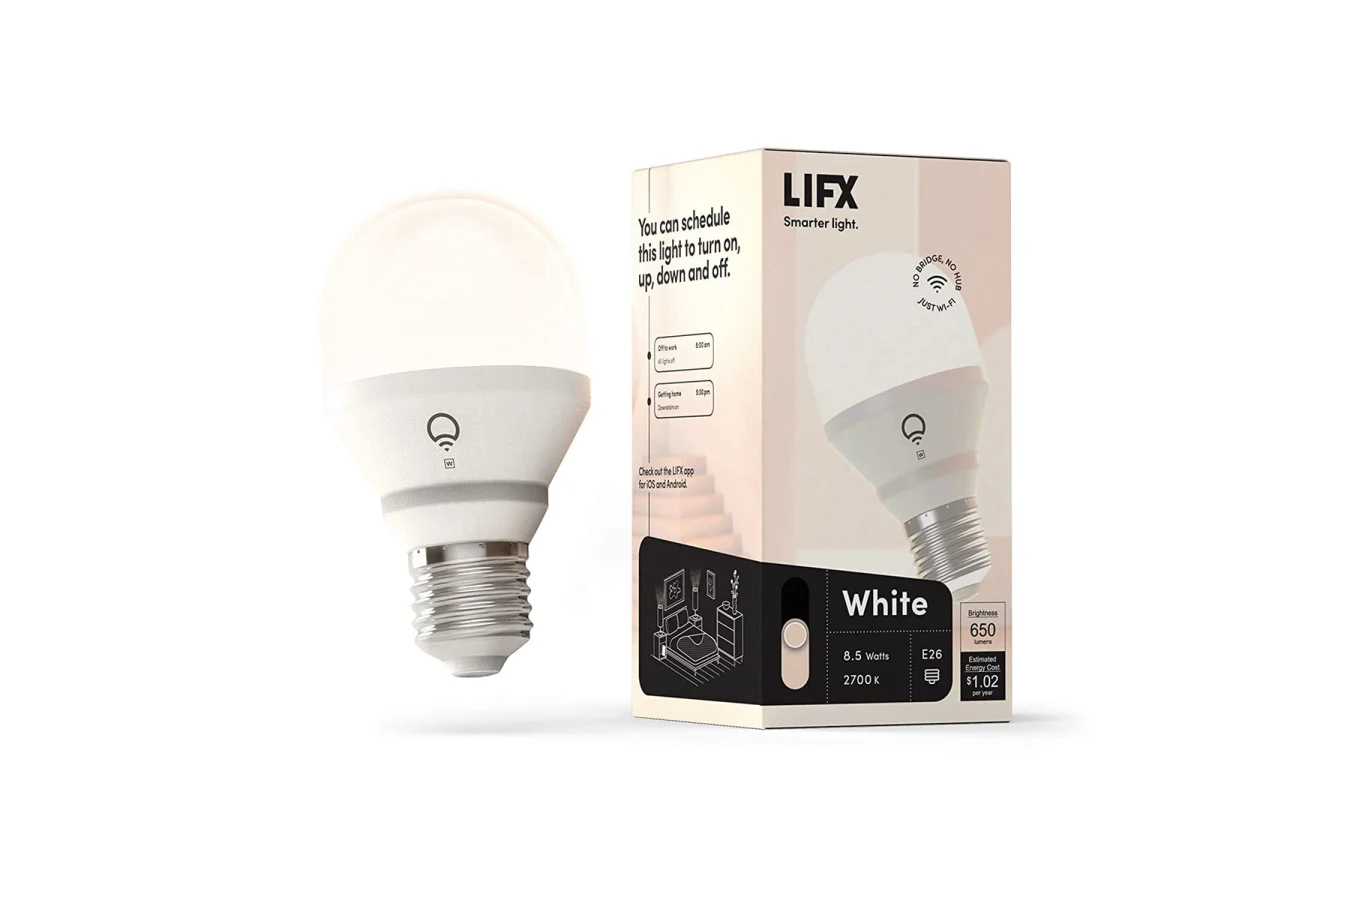 LIFX's White E26 smart light bulb outside of its box on a white background.